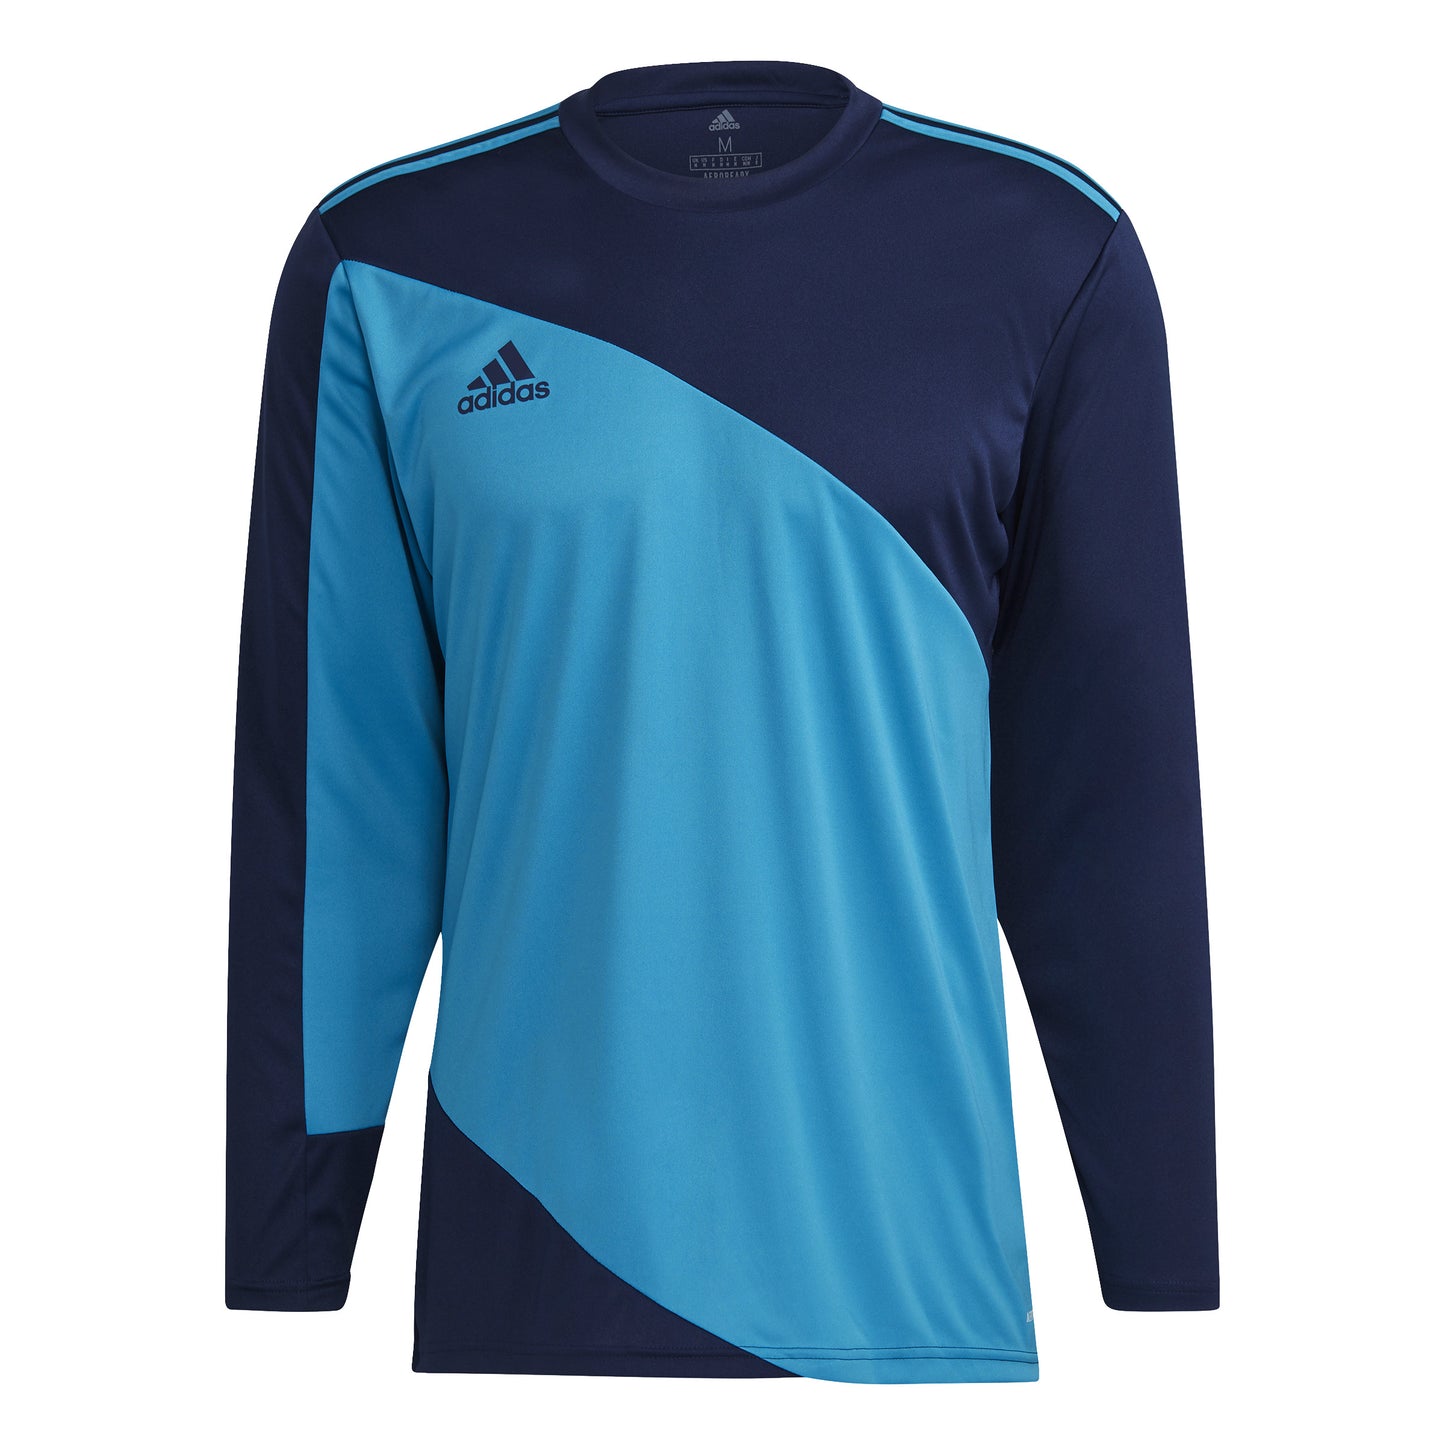 Adidas Squadra 21 Goalkeeper Shirt